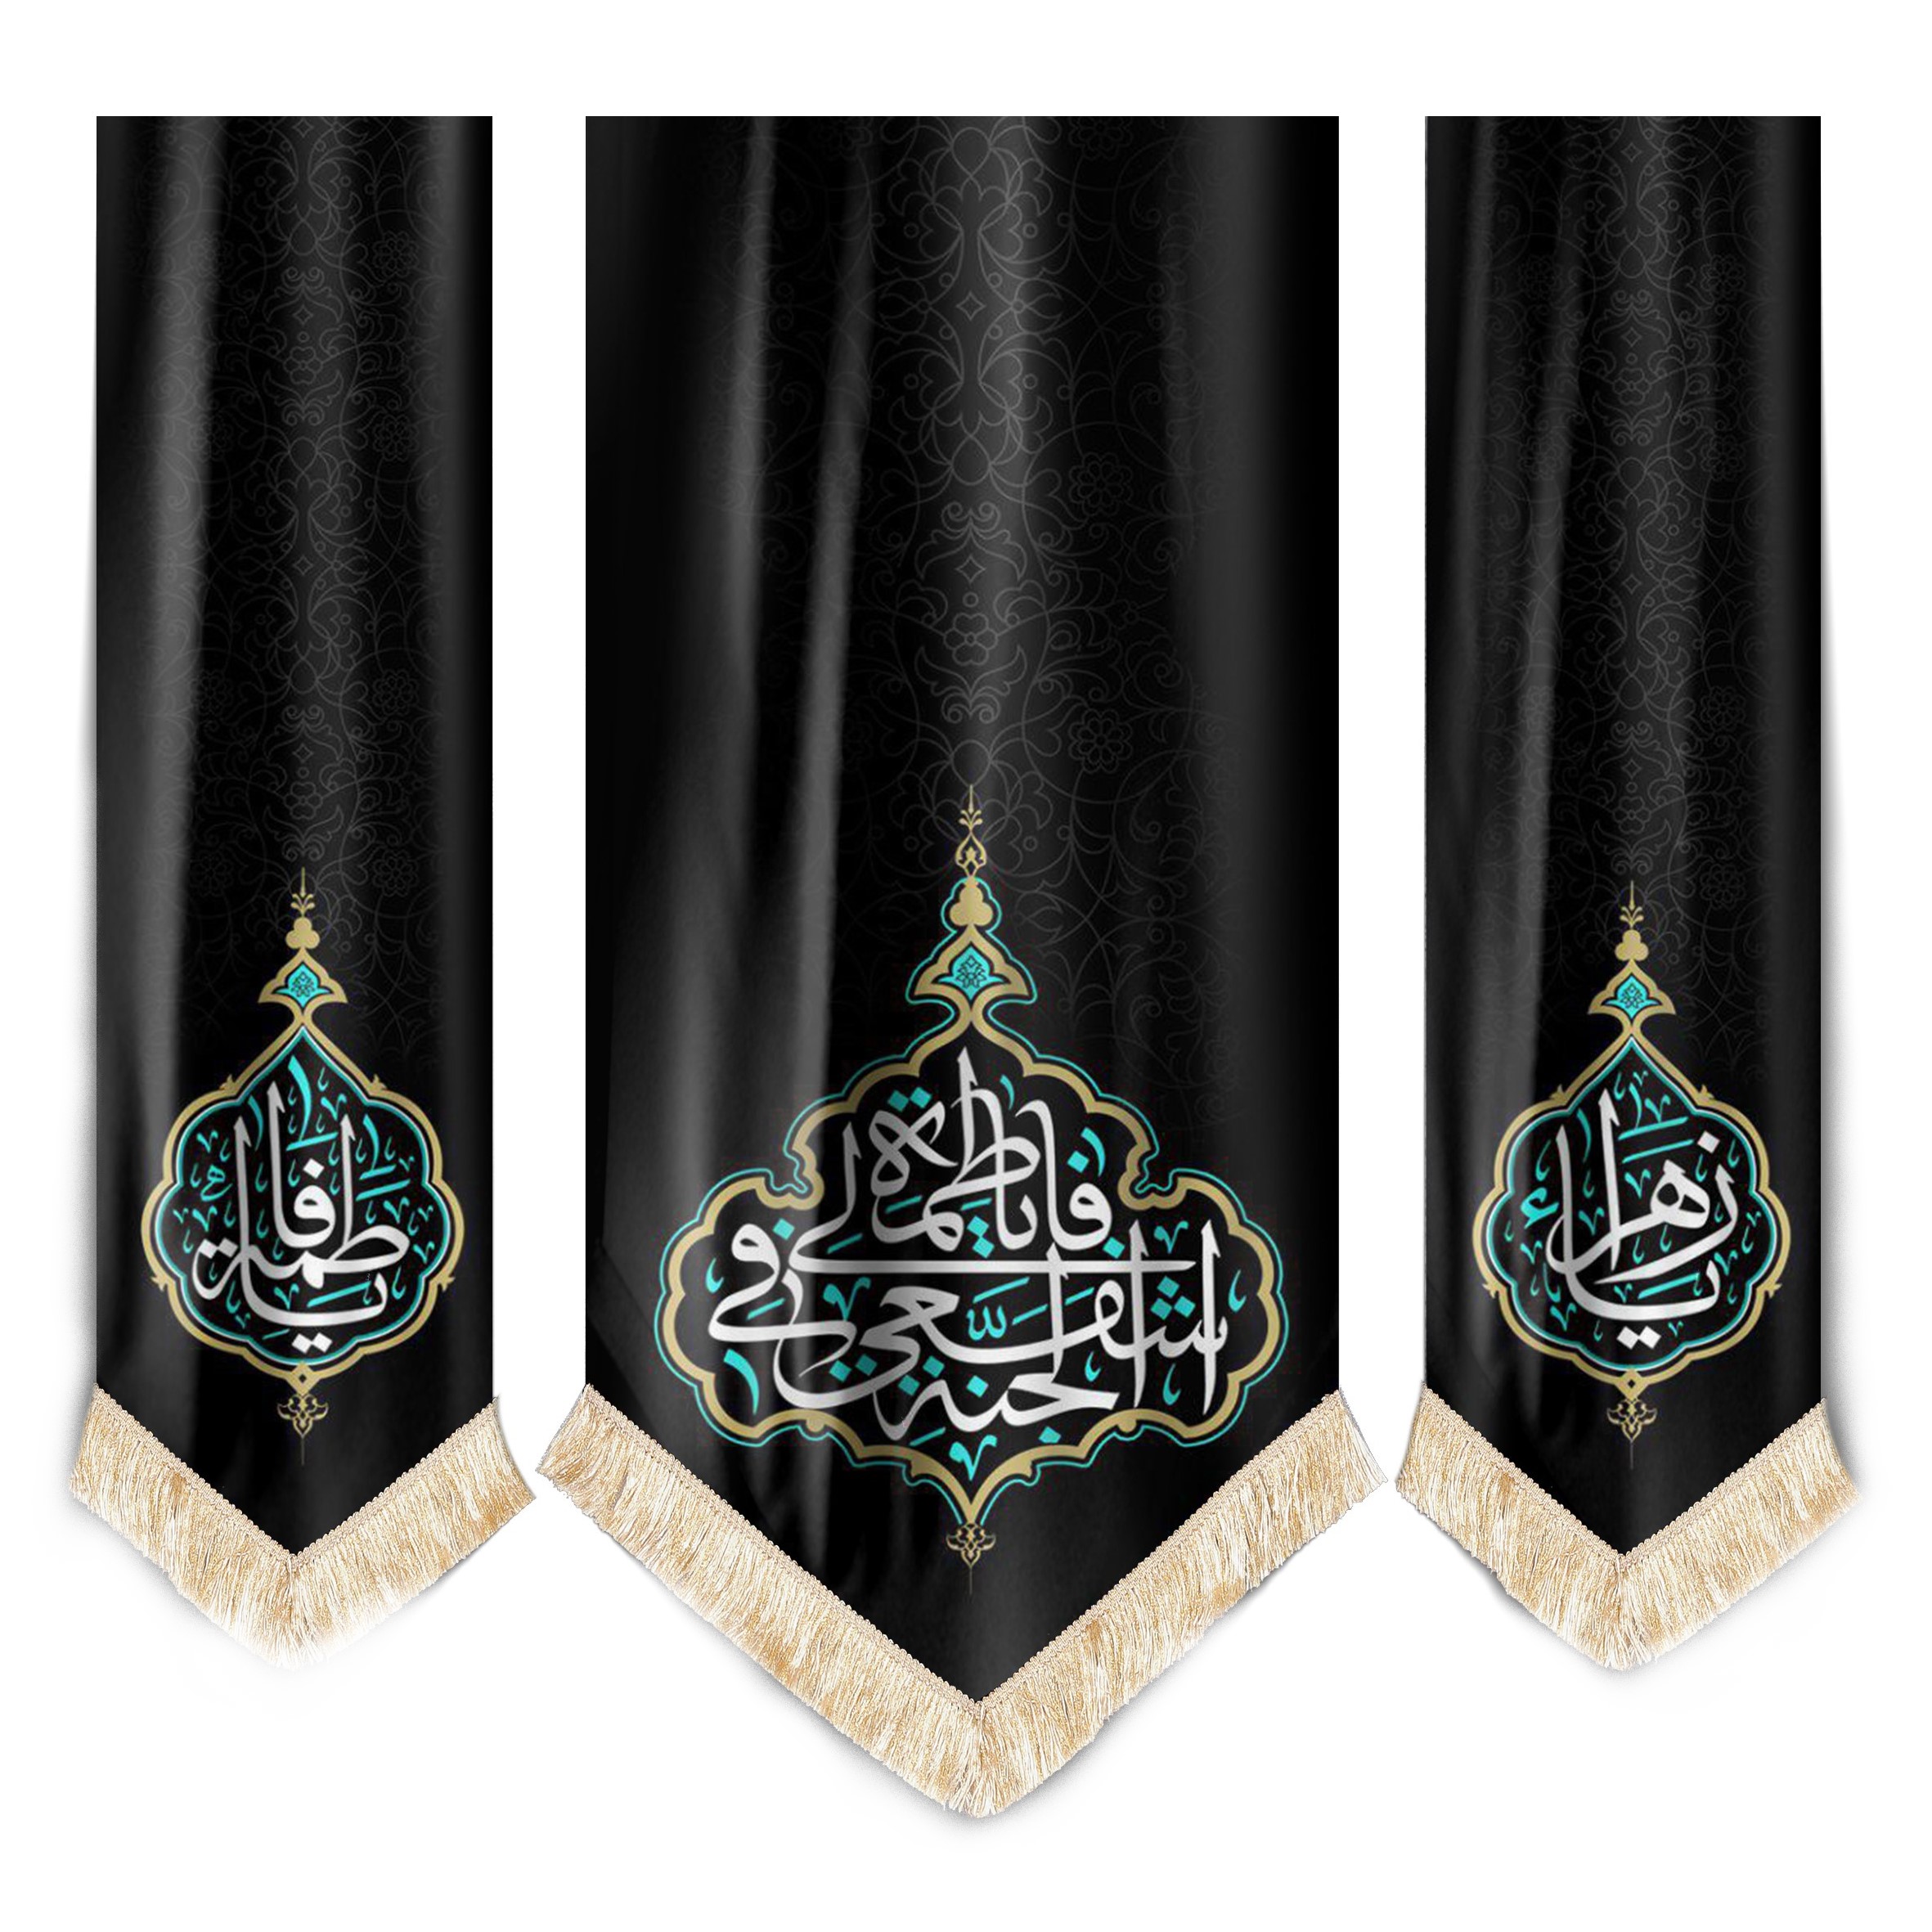 پرچم طرح فاطمیه یا فاطمه اشفعی لی فی الجنه کد 1000470 مجموعه 3 عددی